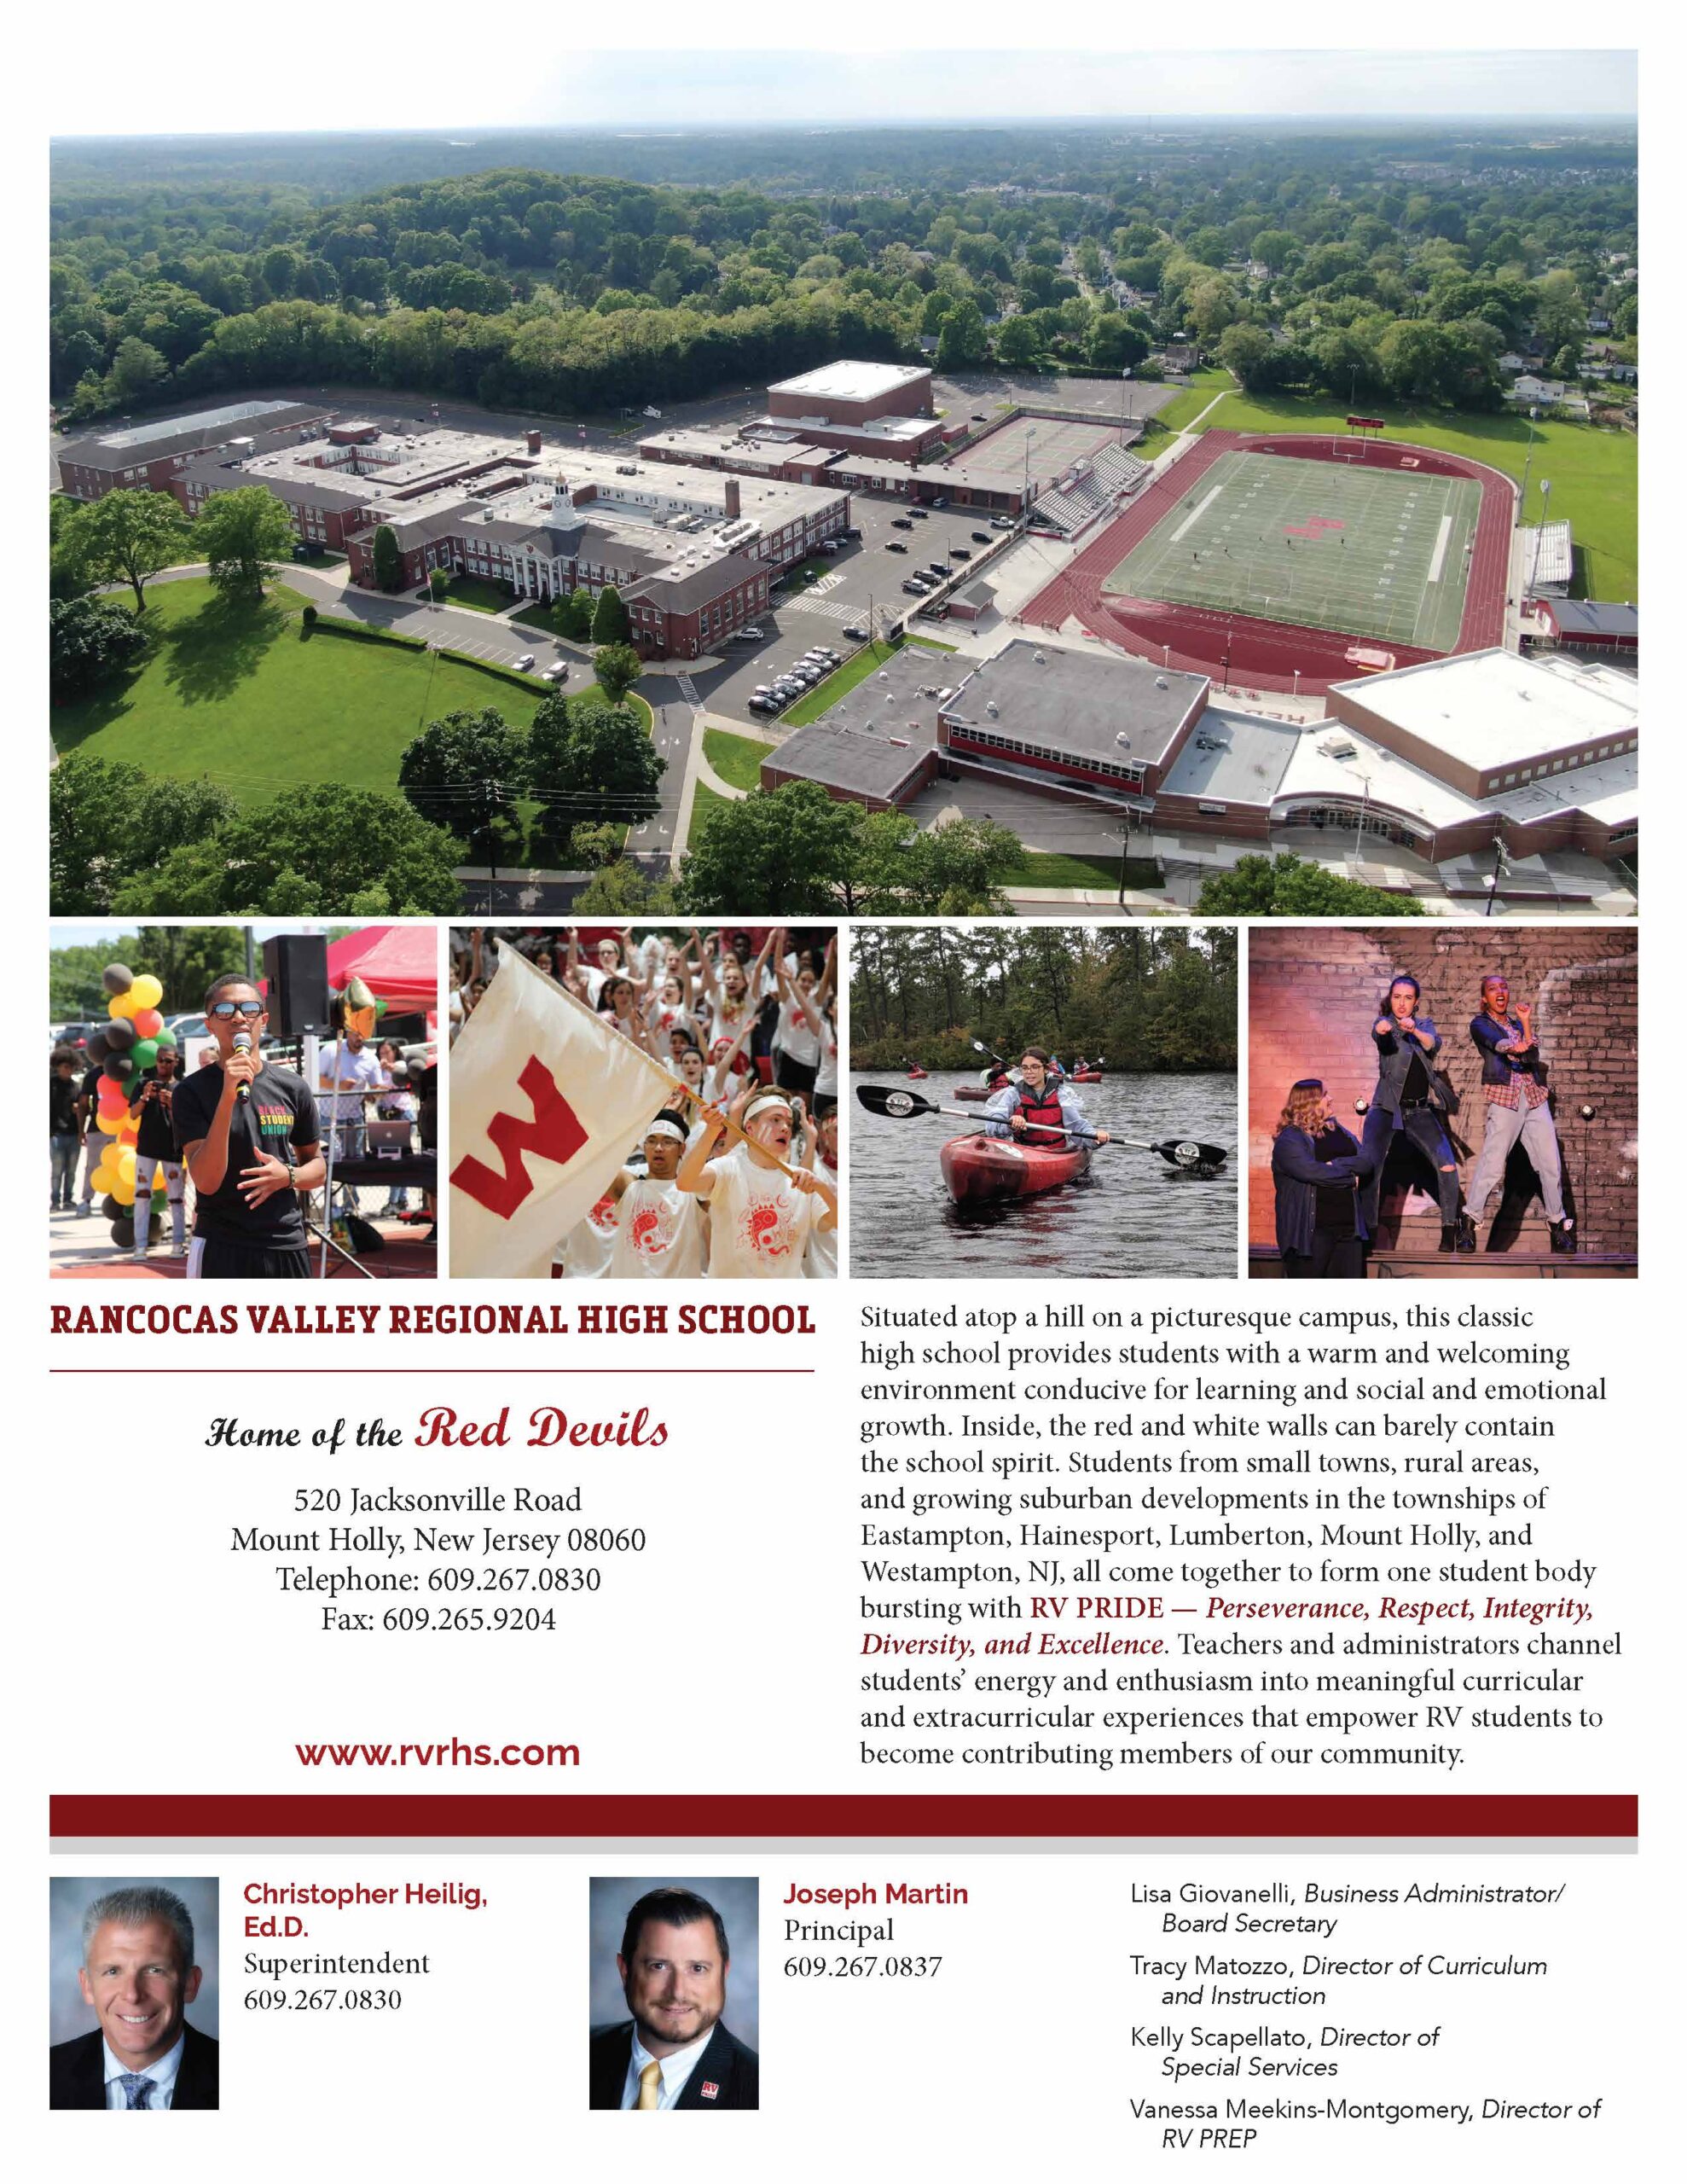 Realtors Breakfast Flyer 1 - A Rancocas Valley Regional High School profile is formatted as an MLS listing.   